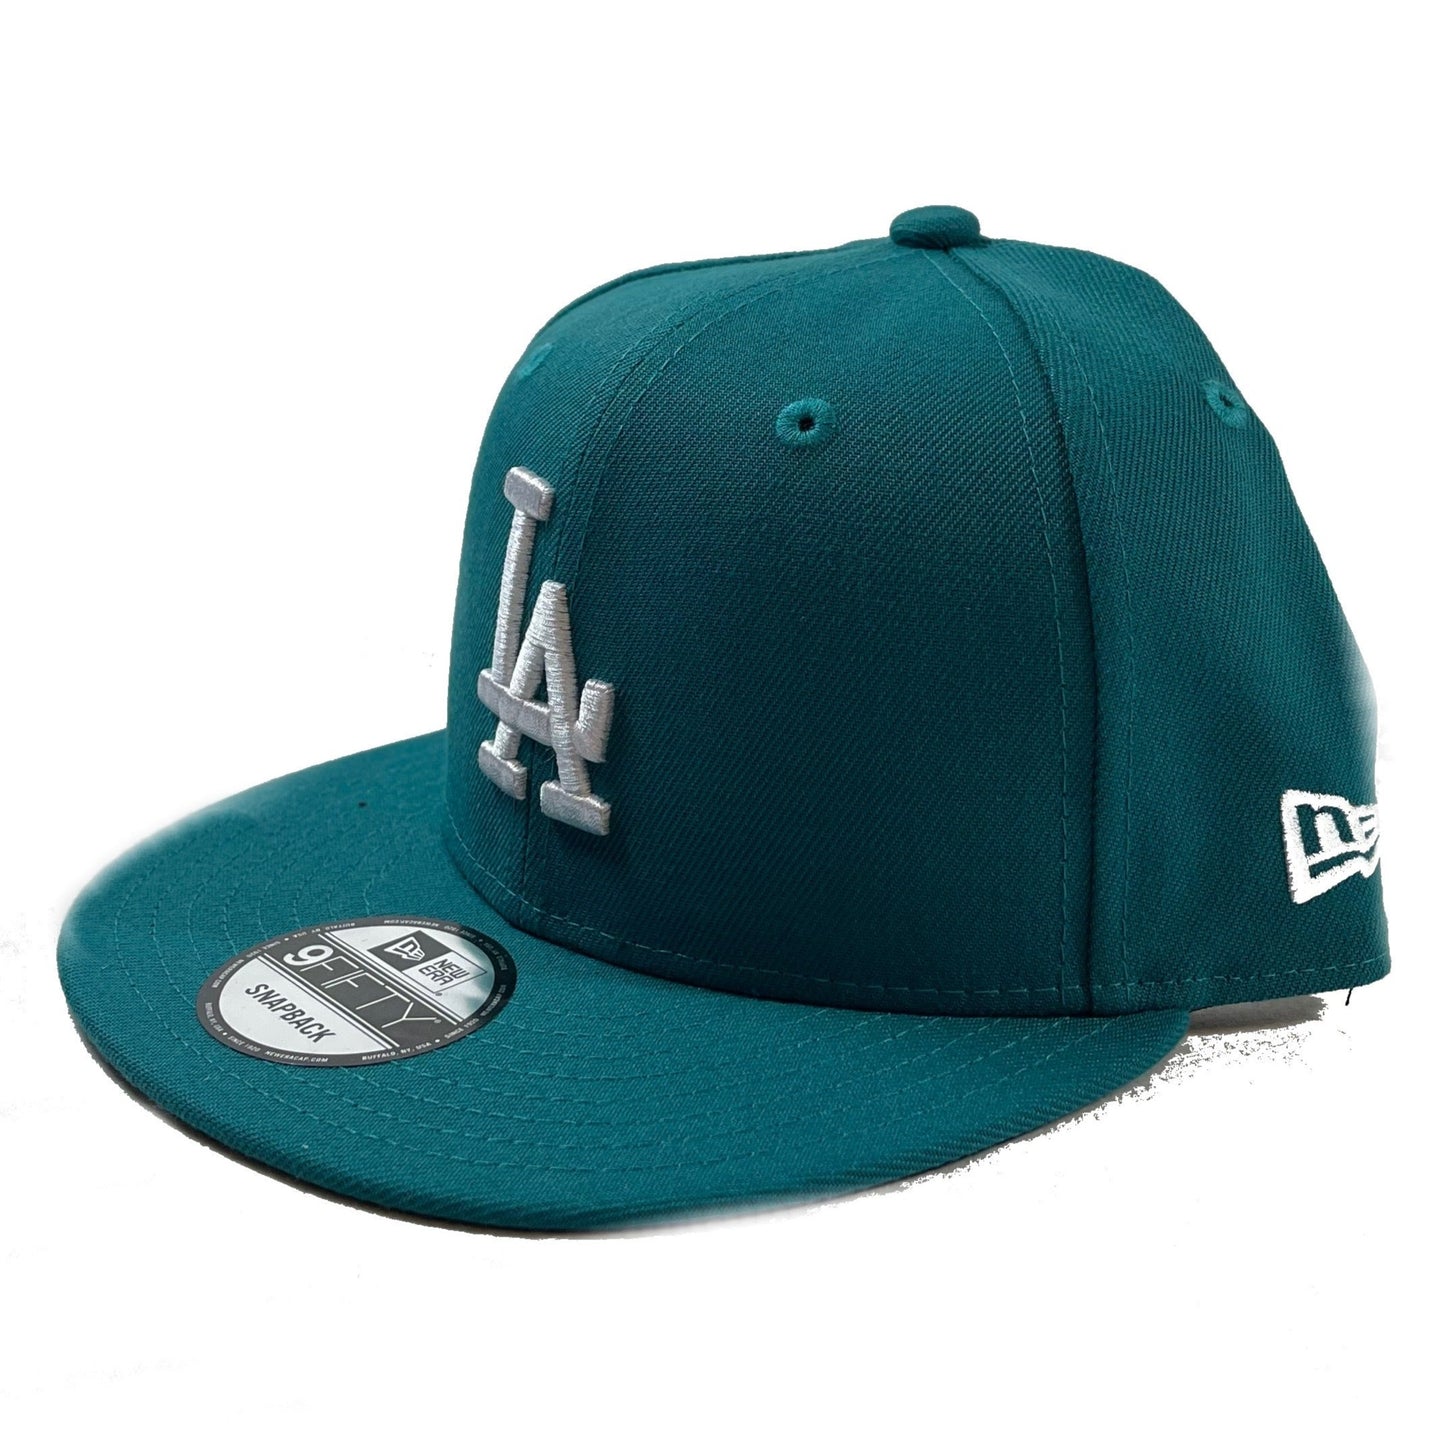 Los Angeles Dodgers (Teal)